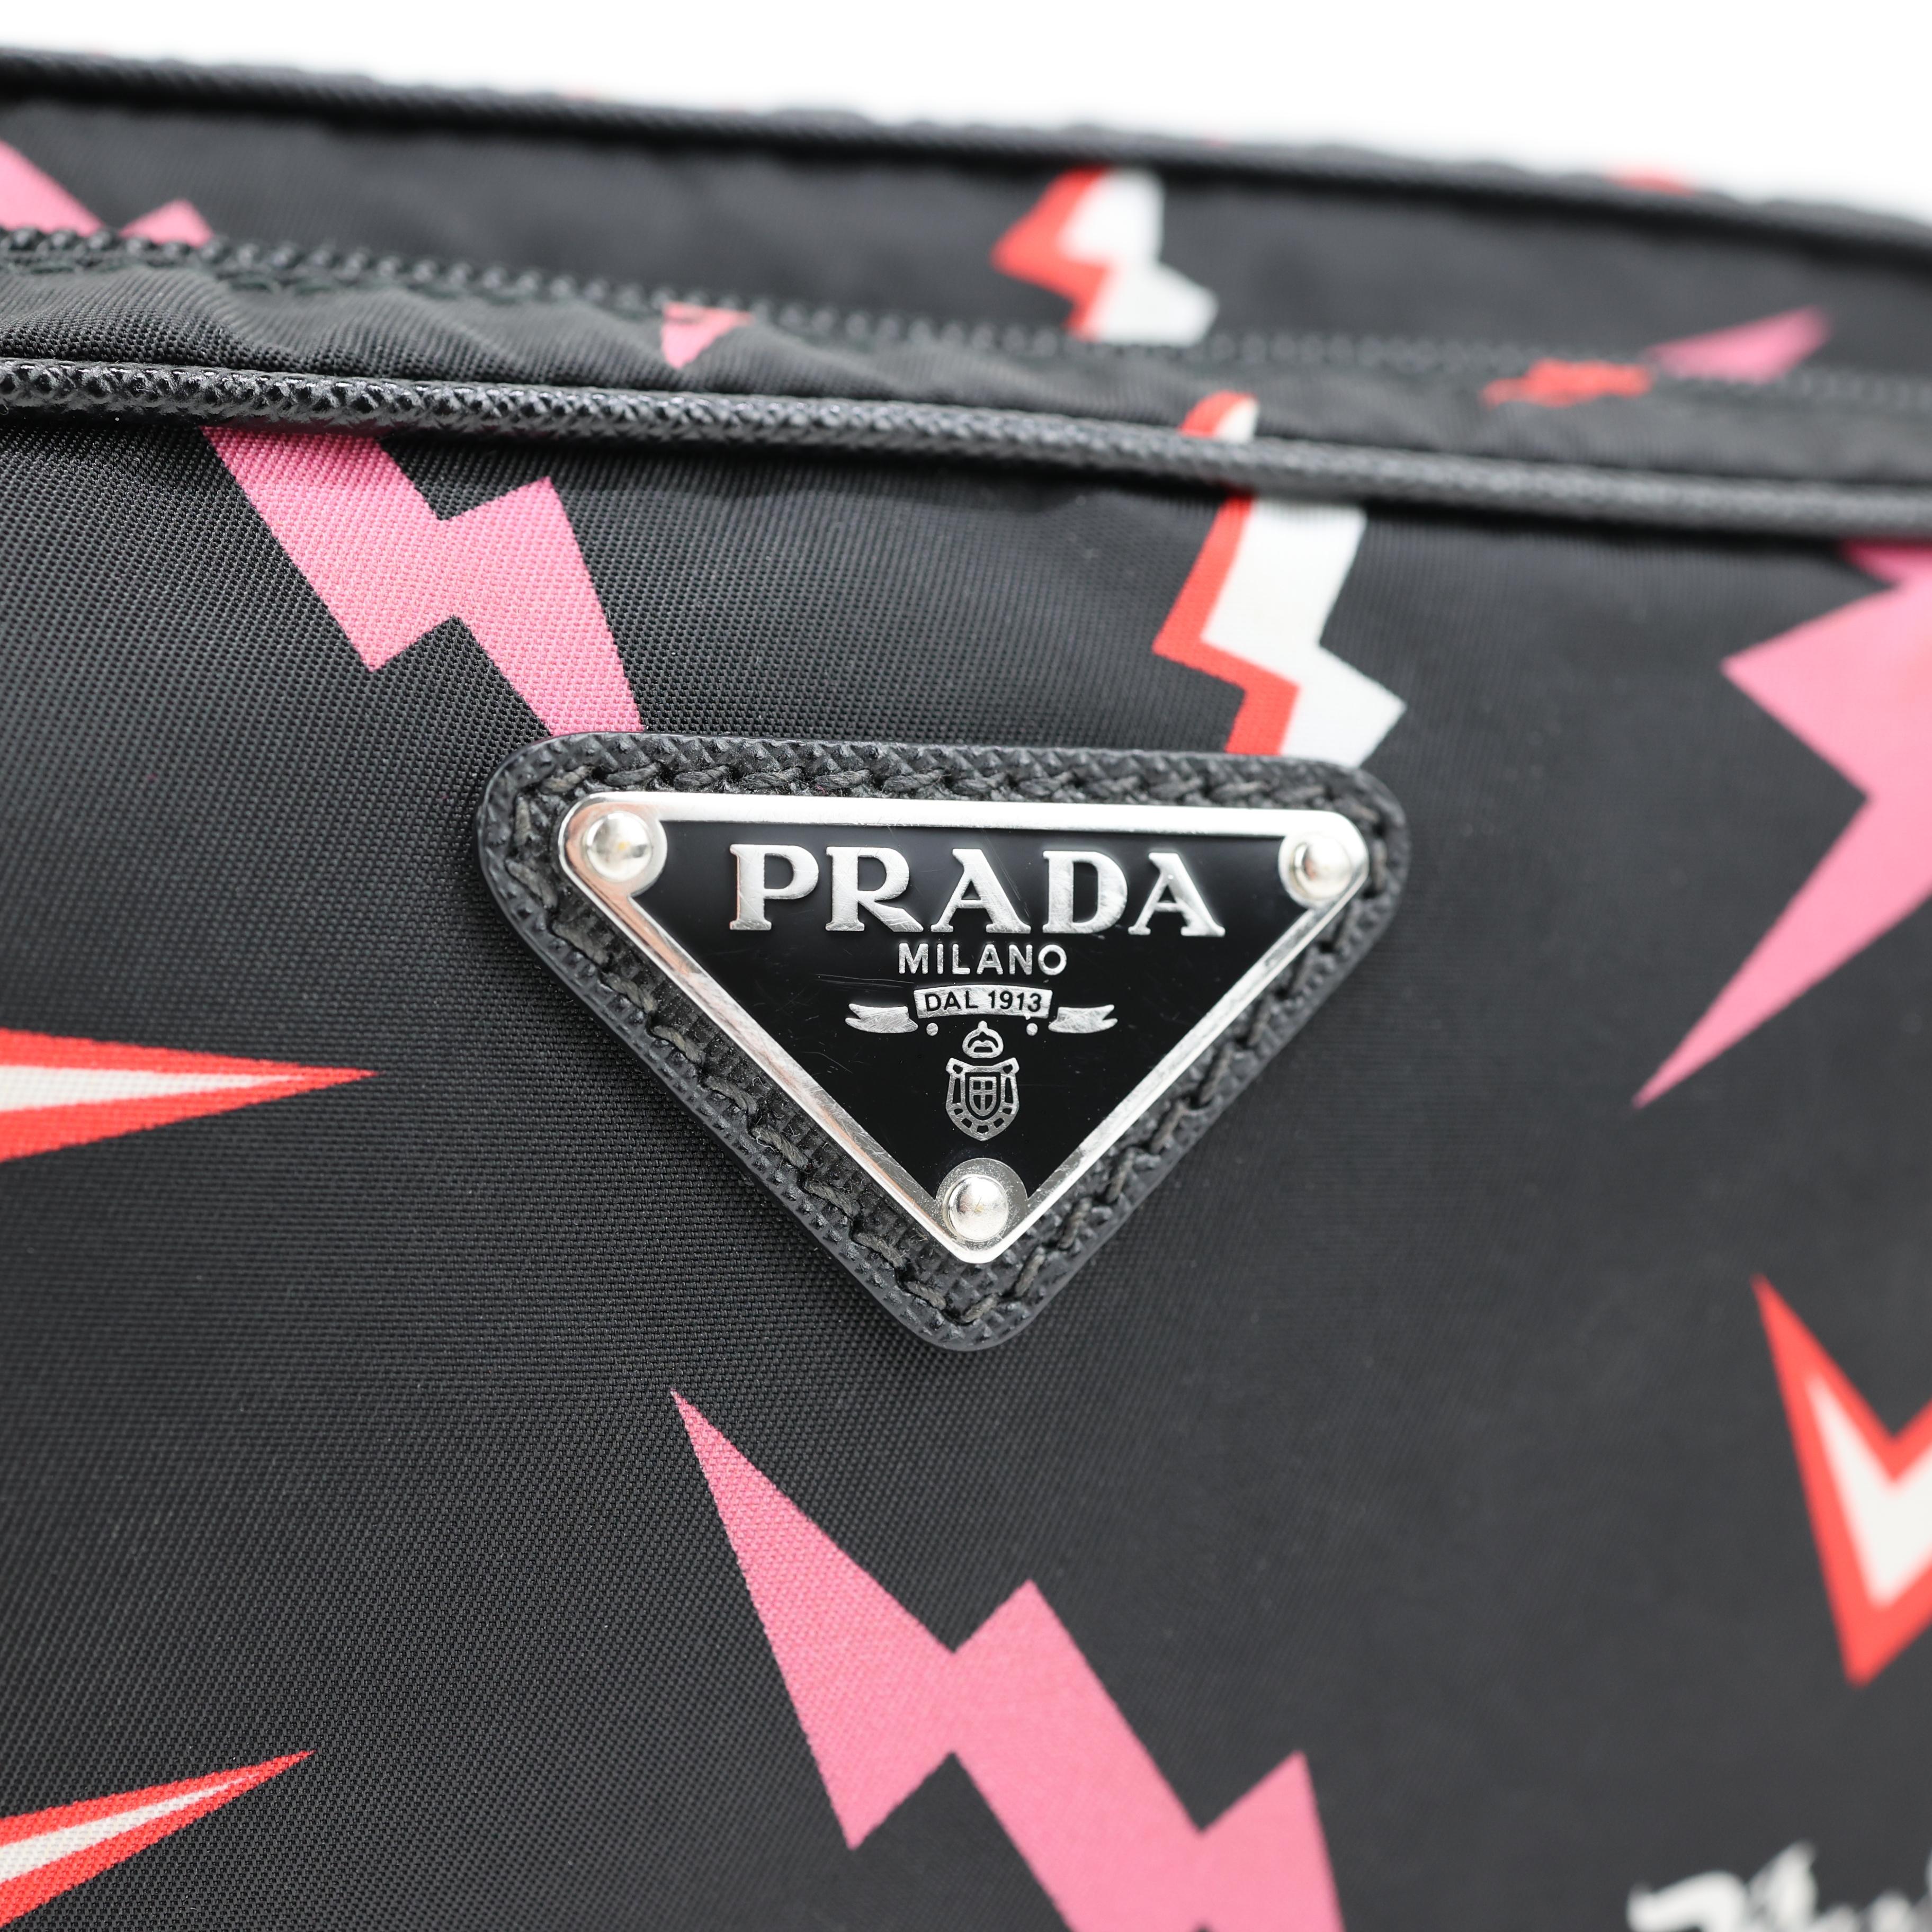 Women's or Men's Prada Beltbag limited edition